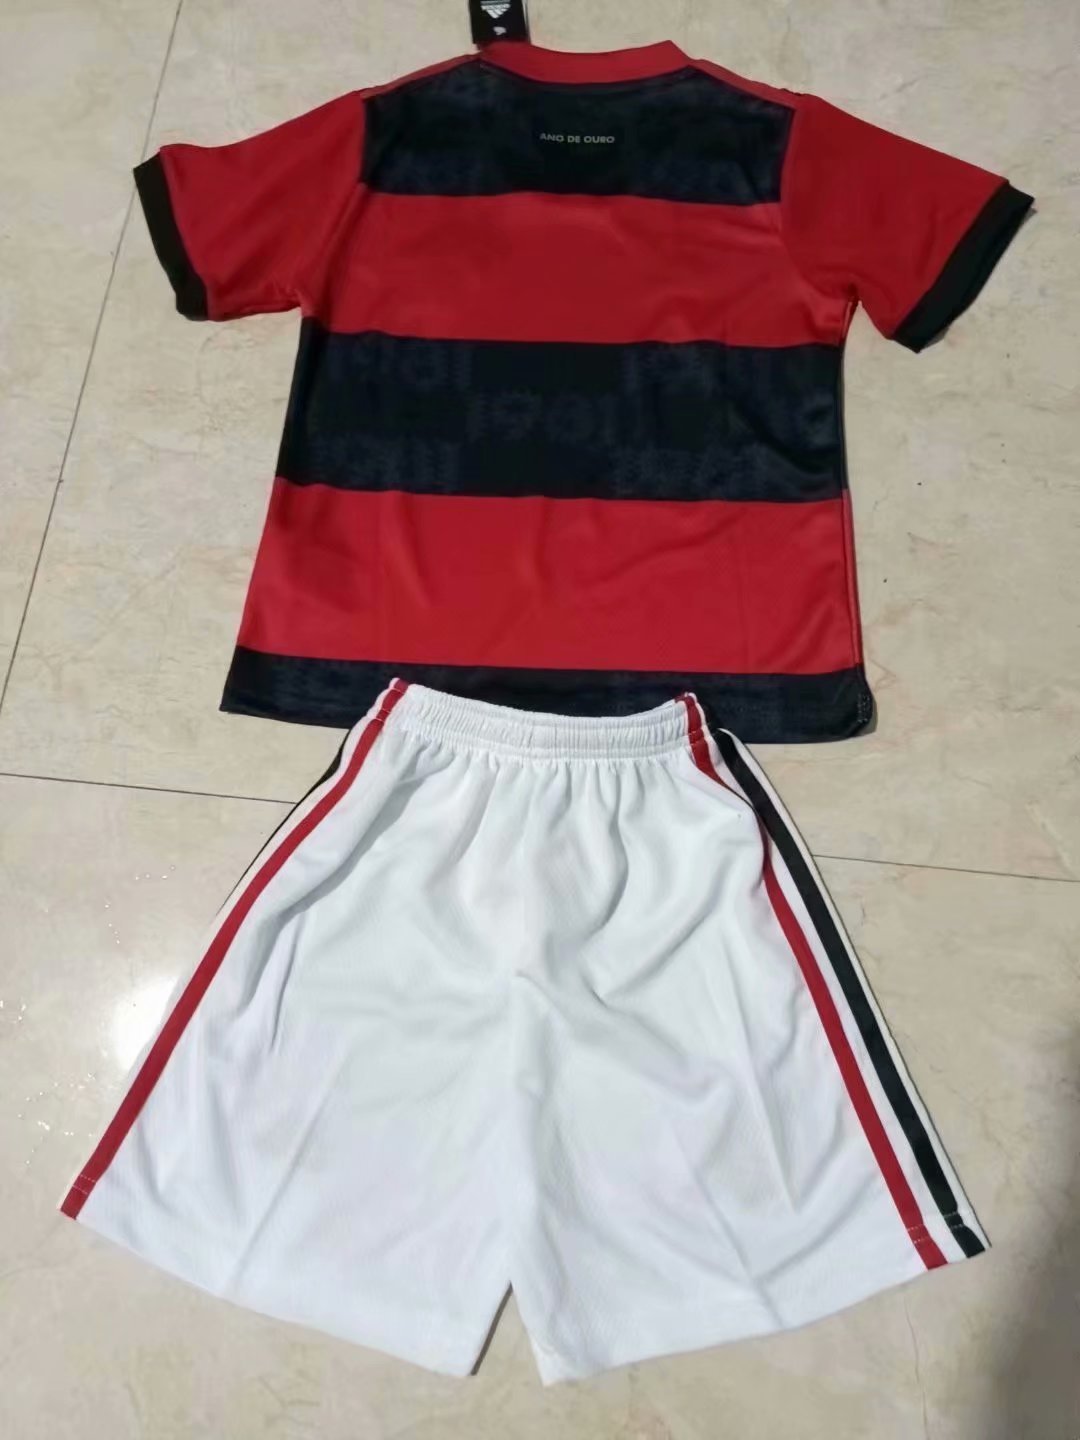 21/22 New Children Flamenco red club soccer kits football uniforms